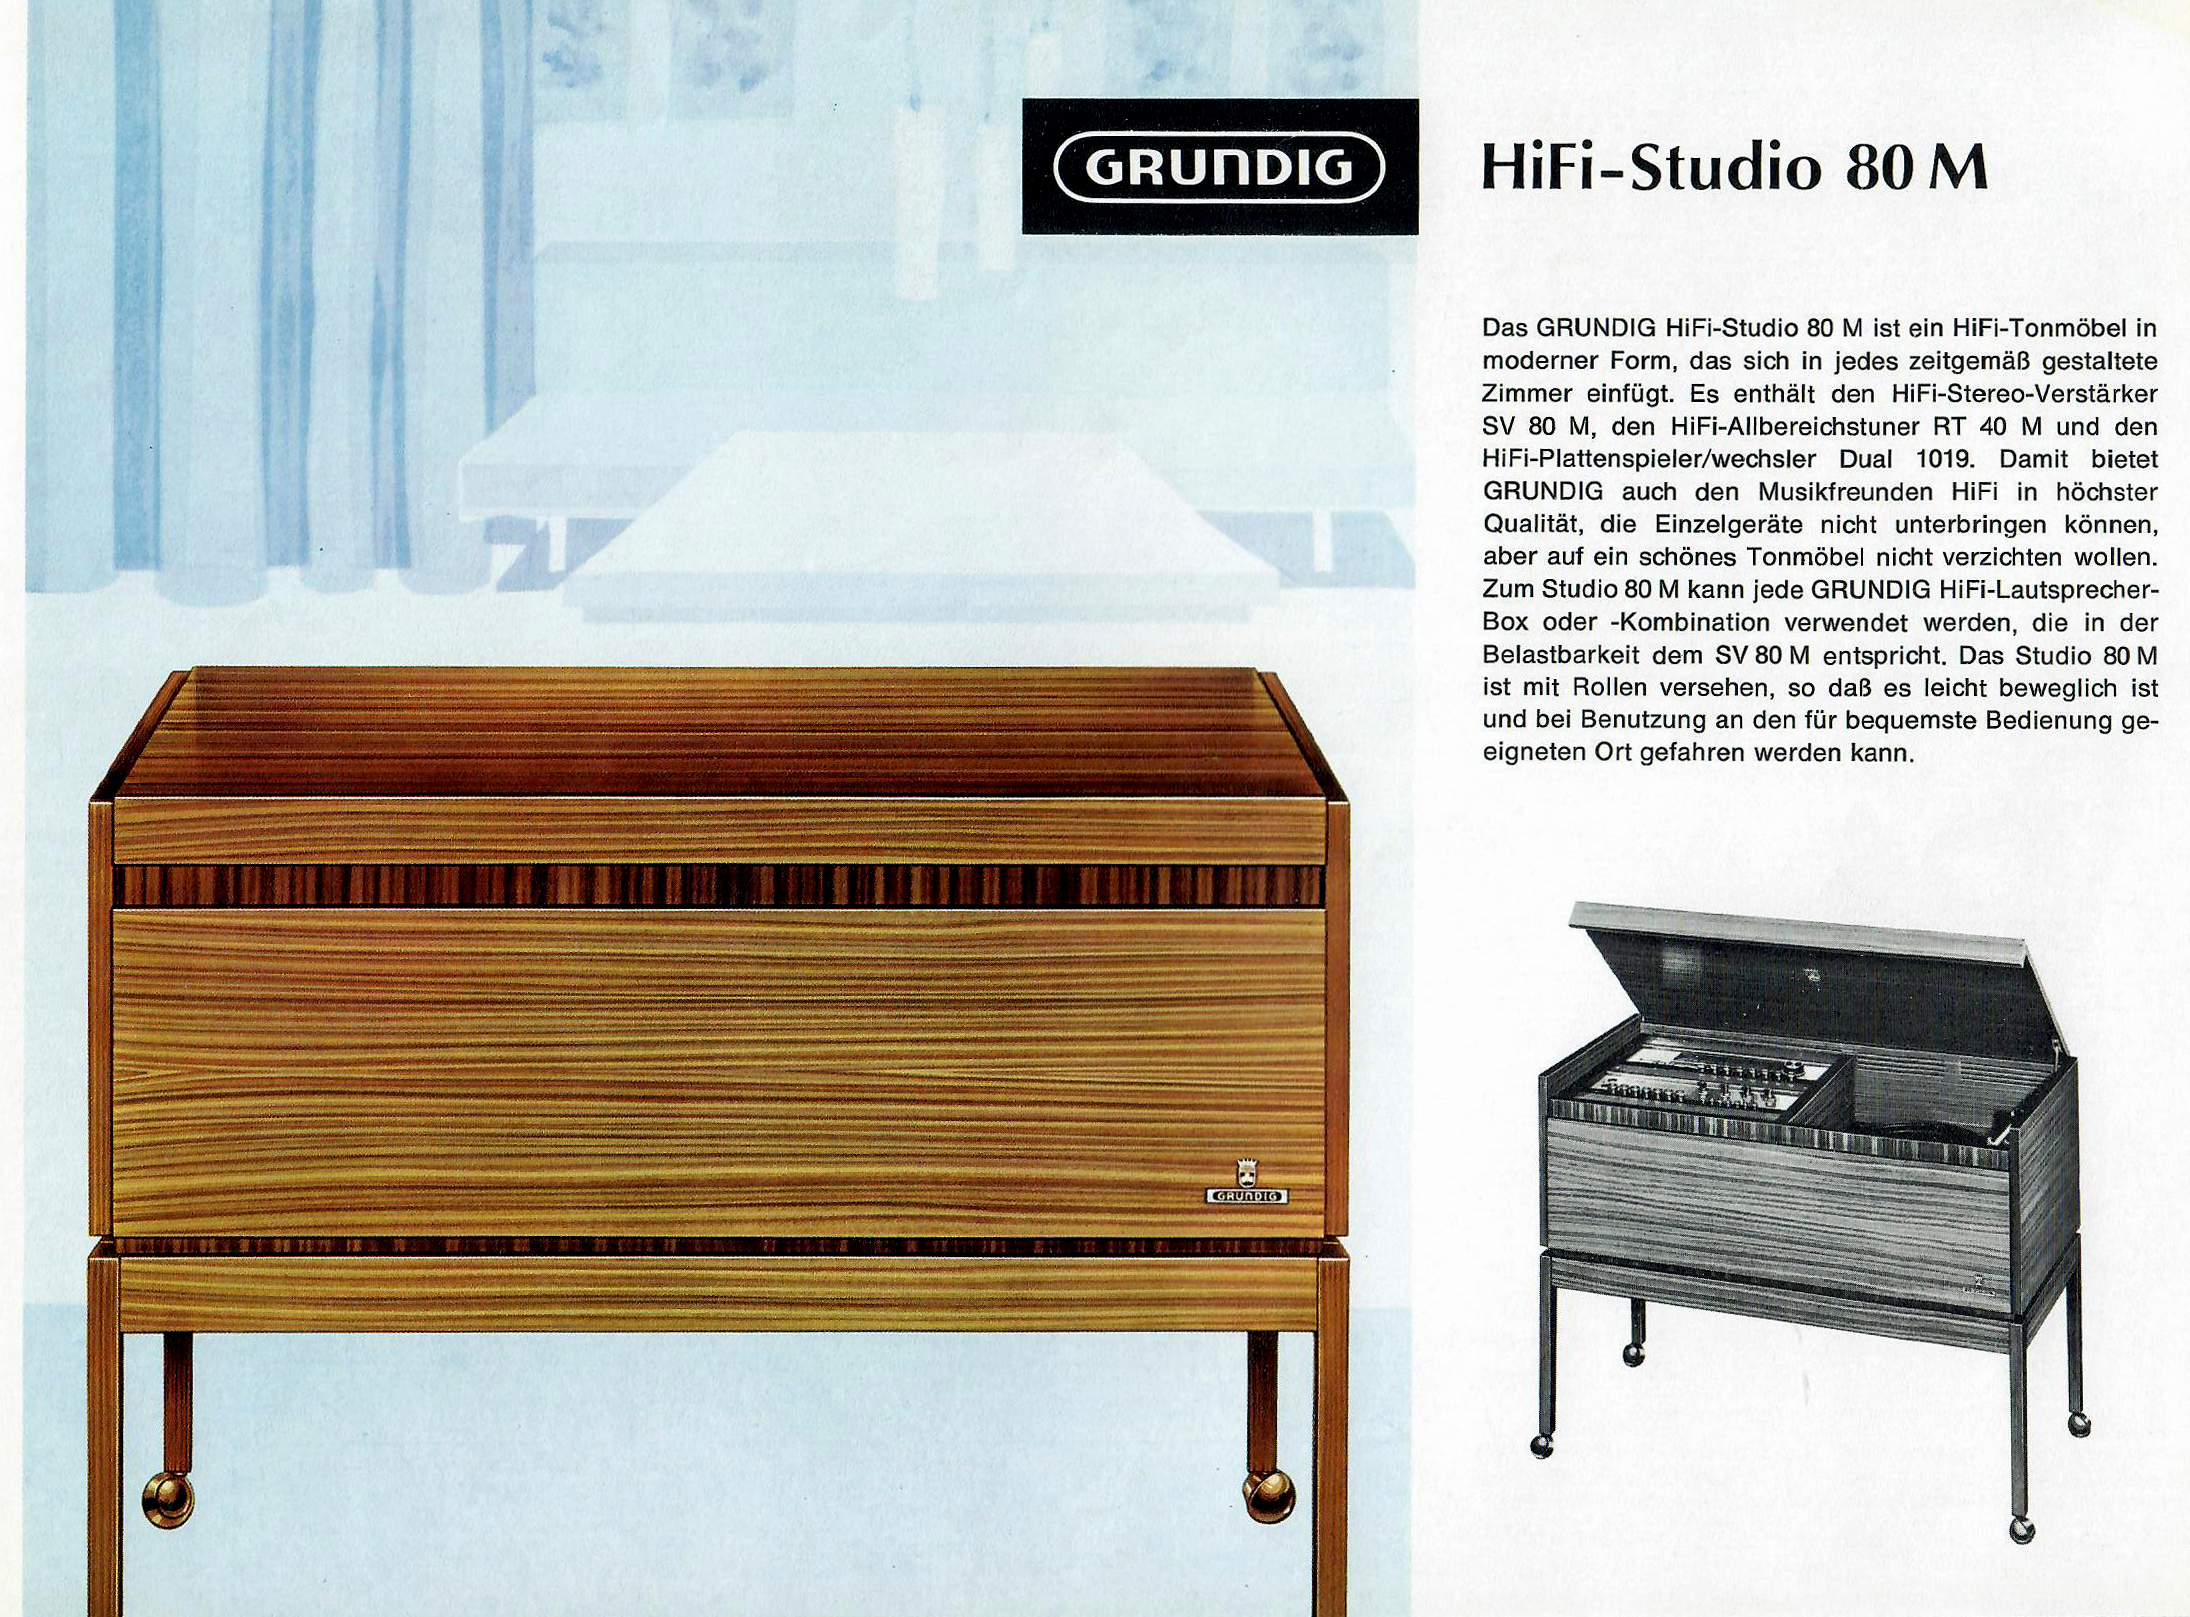 Grundig Hifi-Studio 80 M-Prospekt-1.jpg